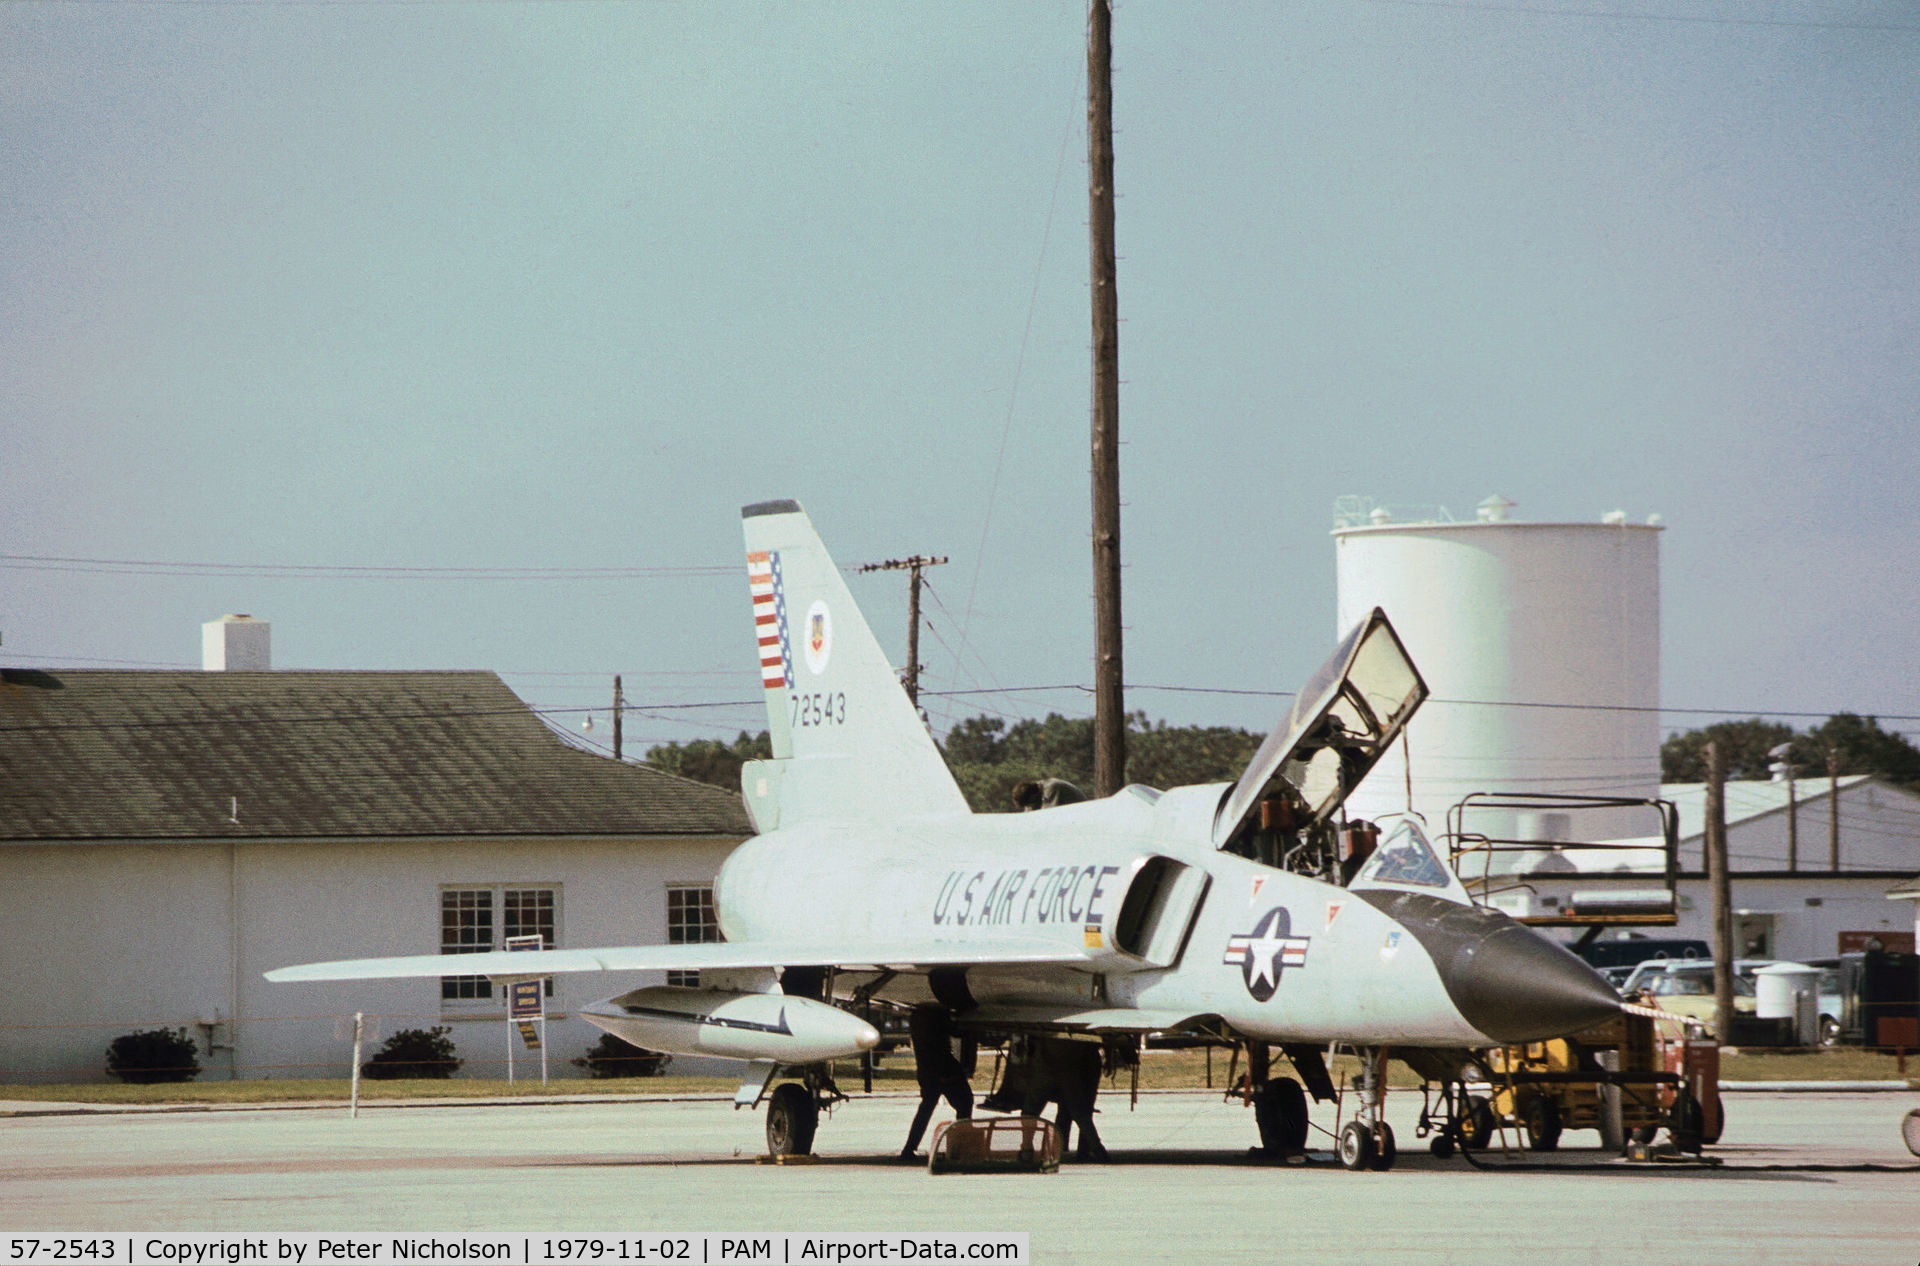 57-2543, 1957 Convair F-106B Delta Dart C/N 8-27-37, F-106B Delta Dart of the 95th Fighter Interceptor Training Squadron at Tyndall AFB in November 1979.